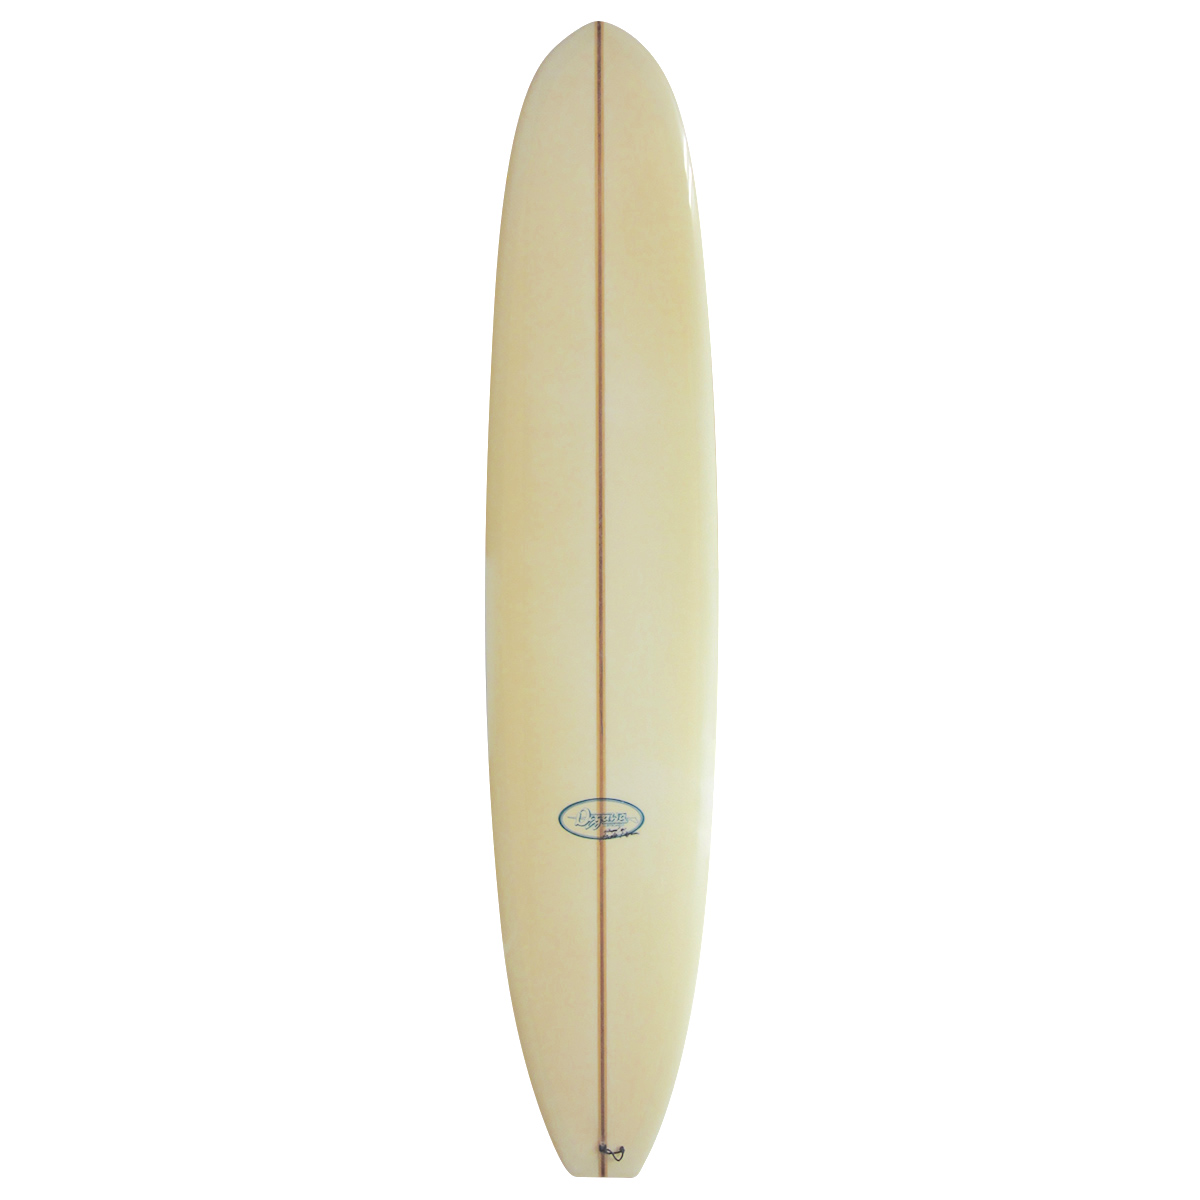 DEGAWA SURFBOARDS / Classic PIG 9'4